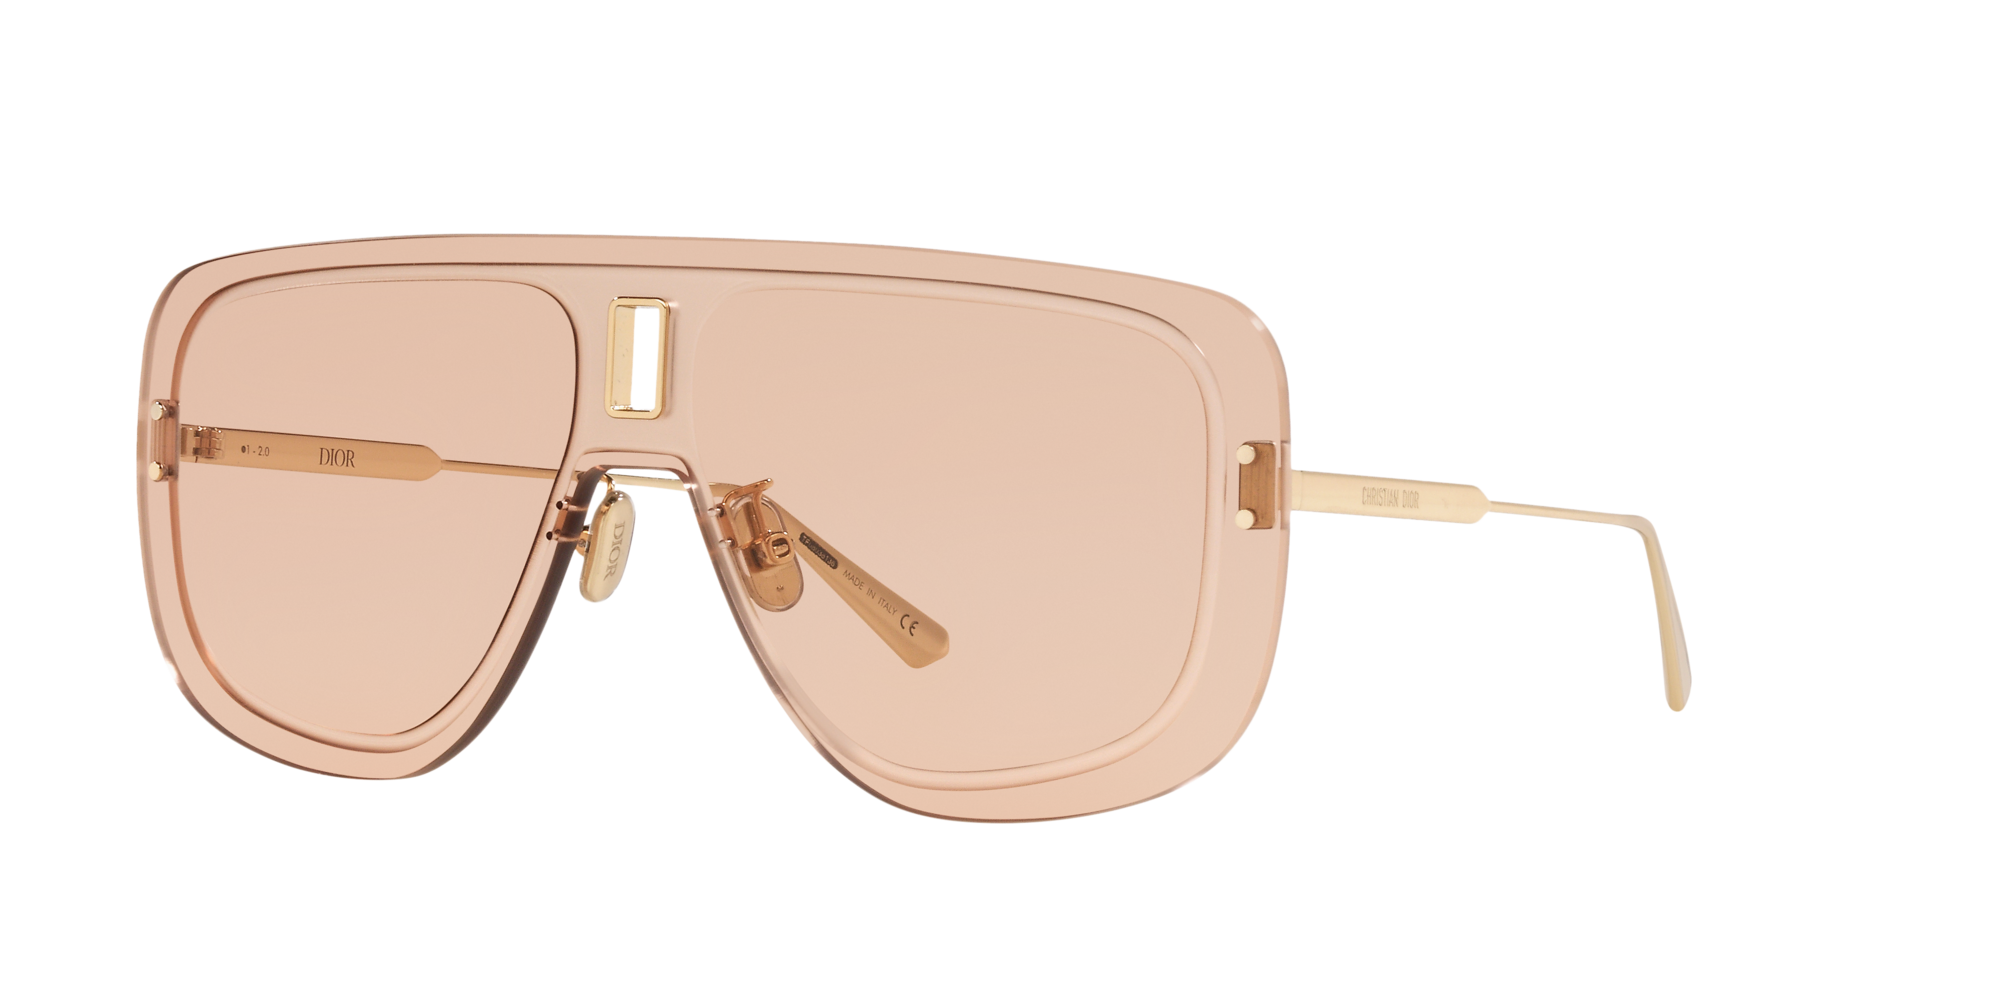 Technologic sunglasses Dior Pink in Metal  26433196